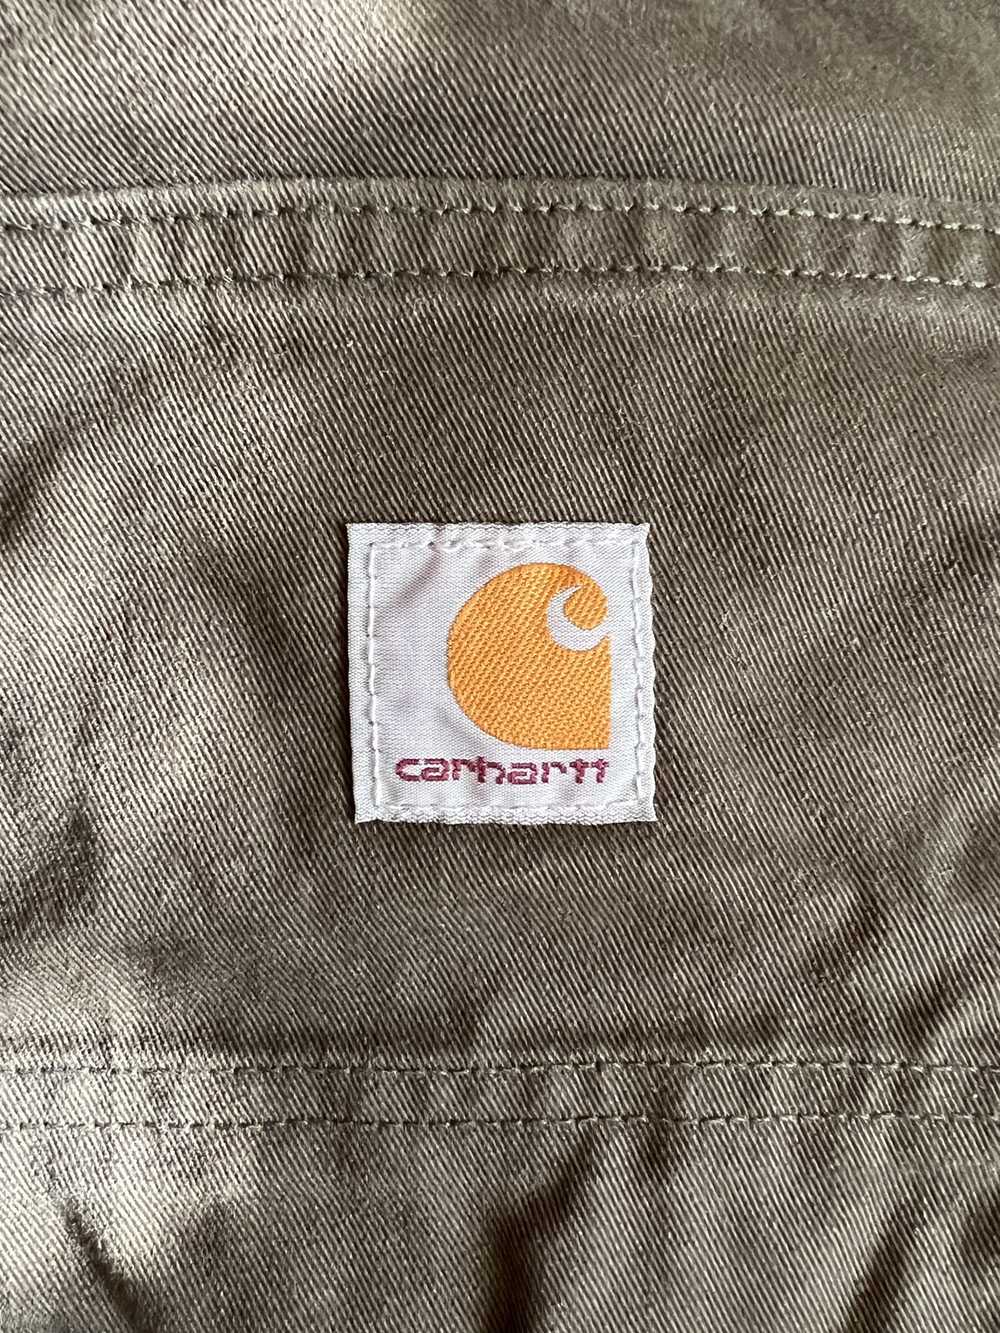 Carhartt Carhartt Vintage Cargo Pants - image 7